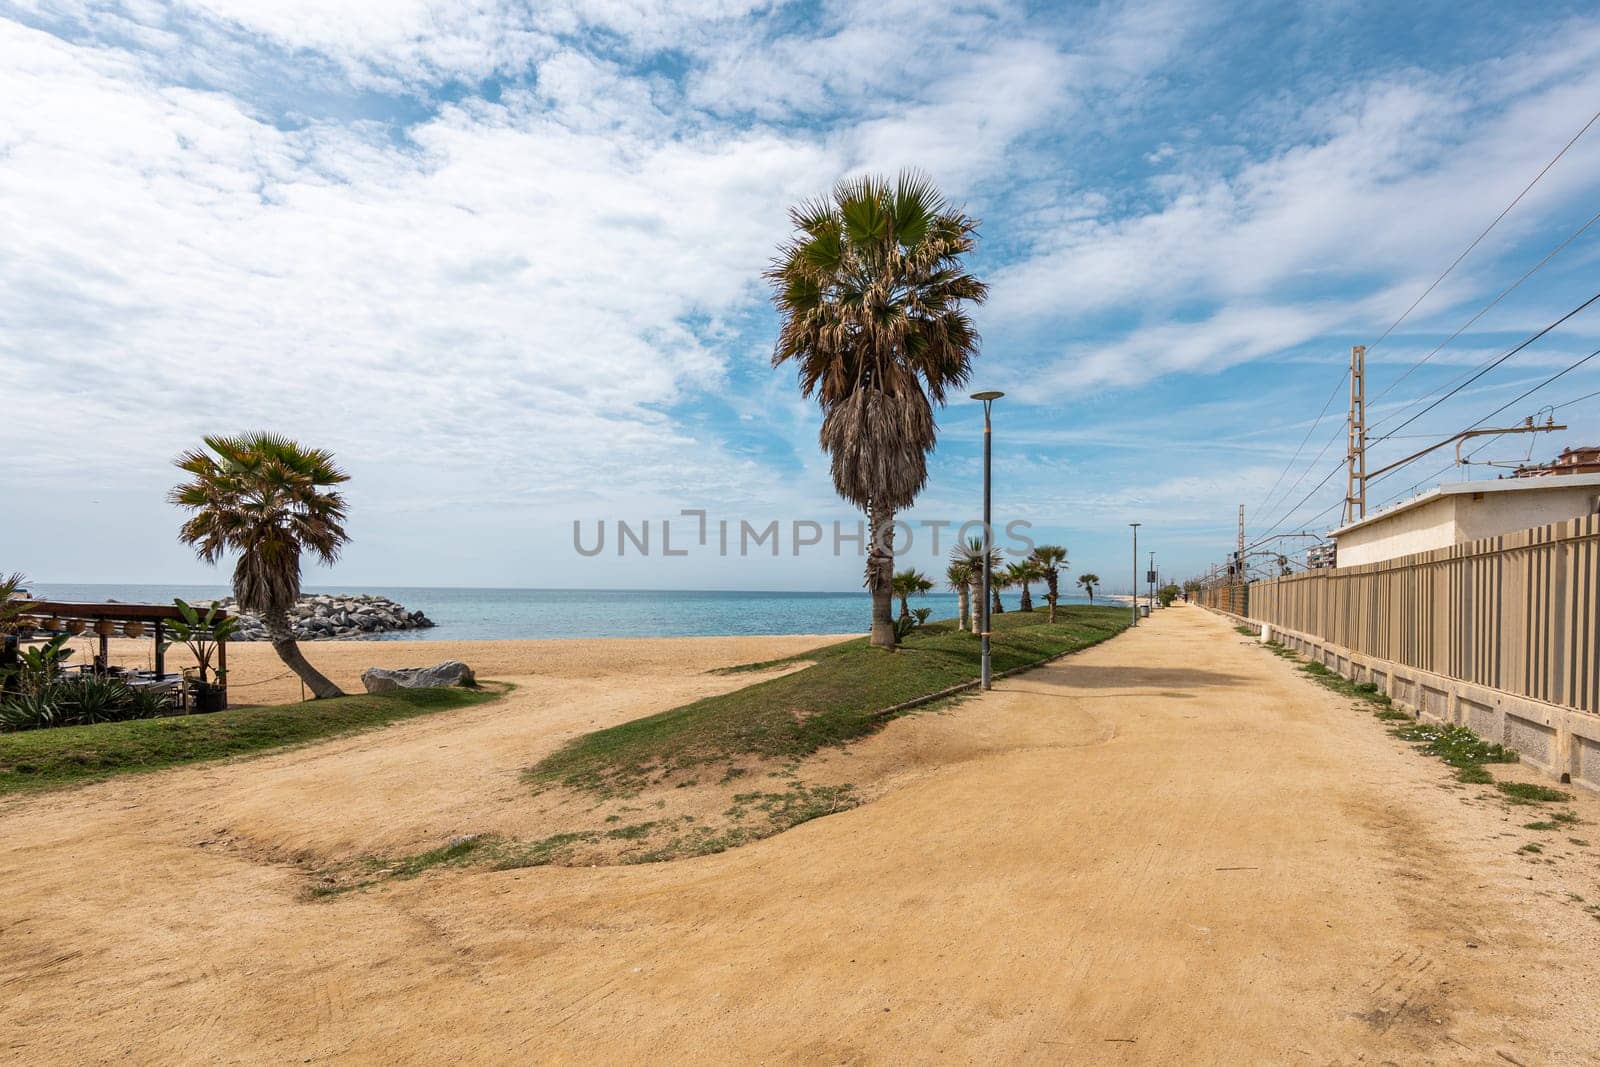 A serene coastal scene in Vilassar de Mar, Spain, with sandy beach, palm trees, and sparkling sea under a clear blue sky.